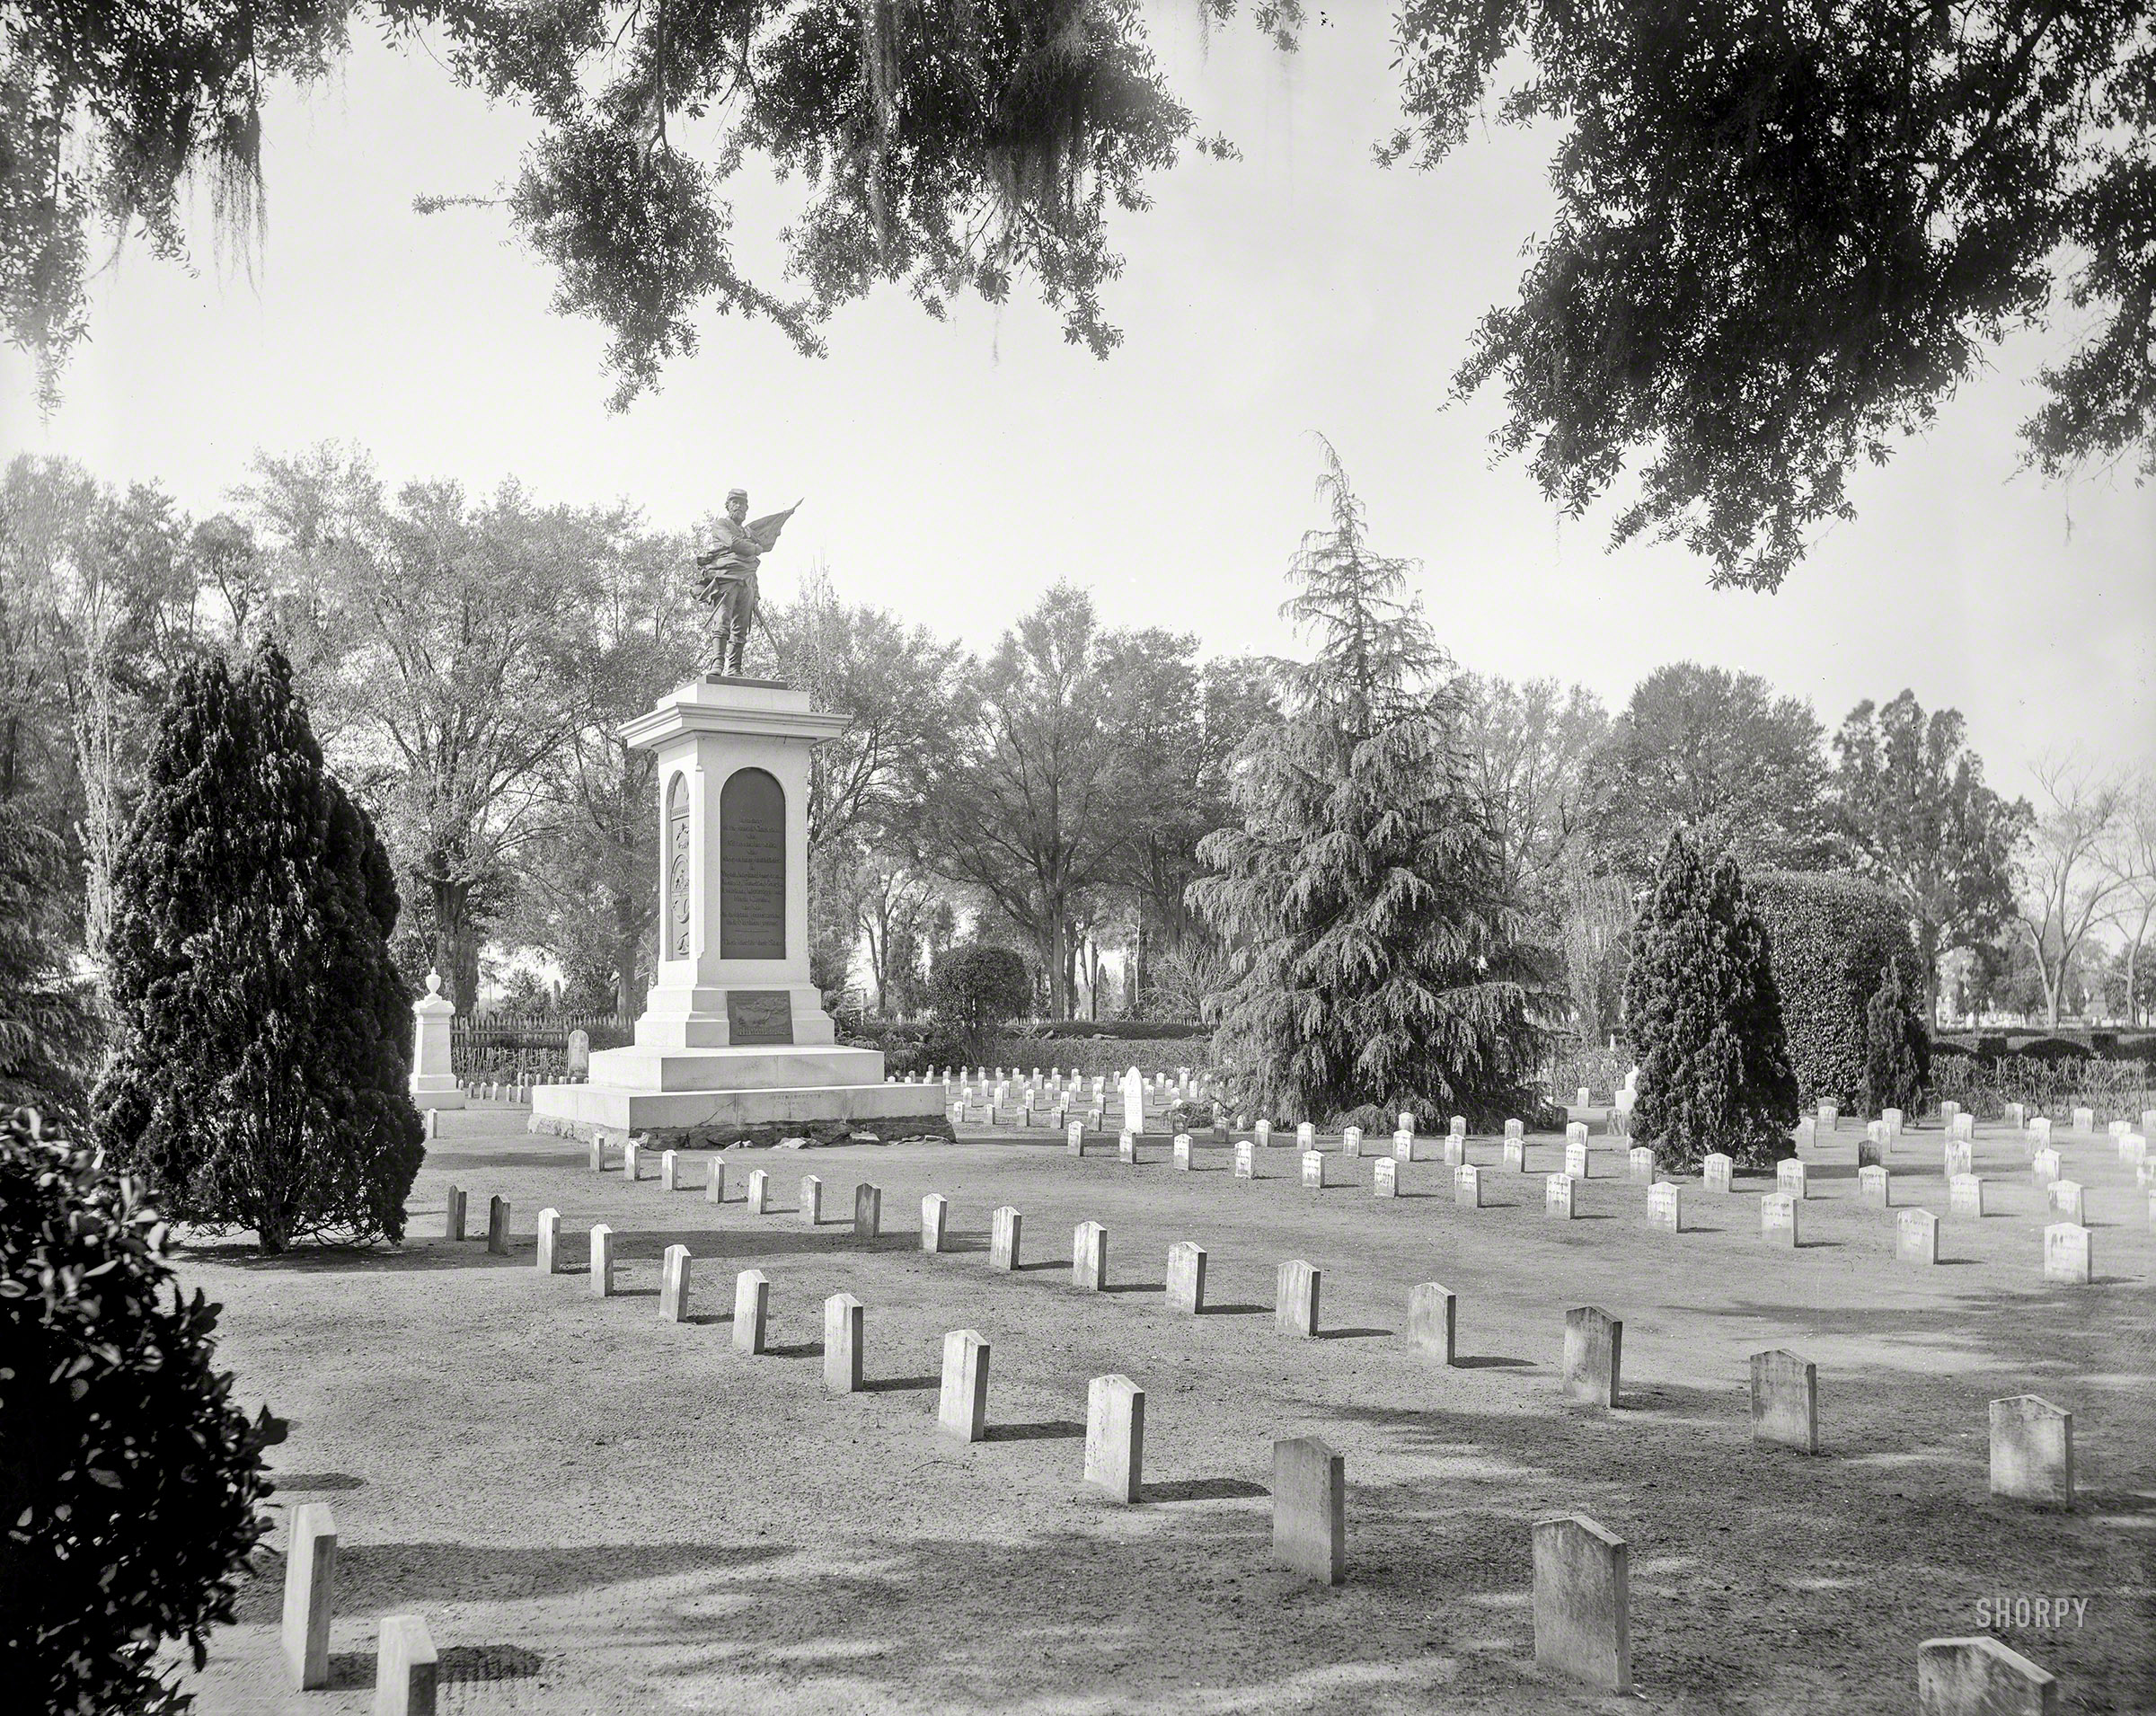 Circa 1900. "Confederate Monument, Magnolia Cemetery, Charleston, S.C." 8x10 inch dry plate glass negative, Detroit Publishing Company. View full size.